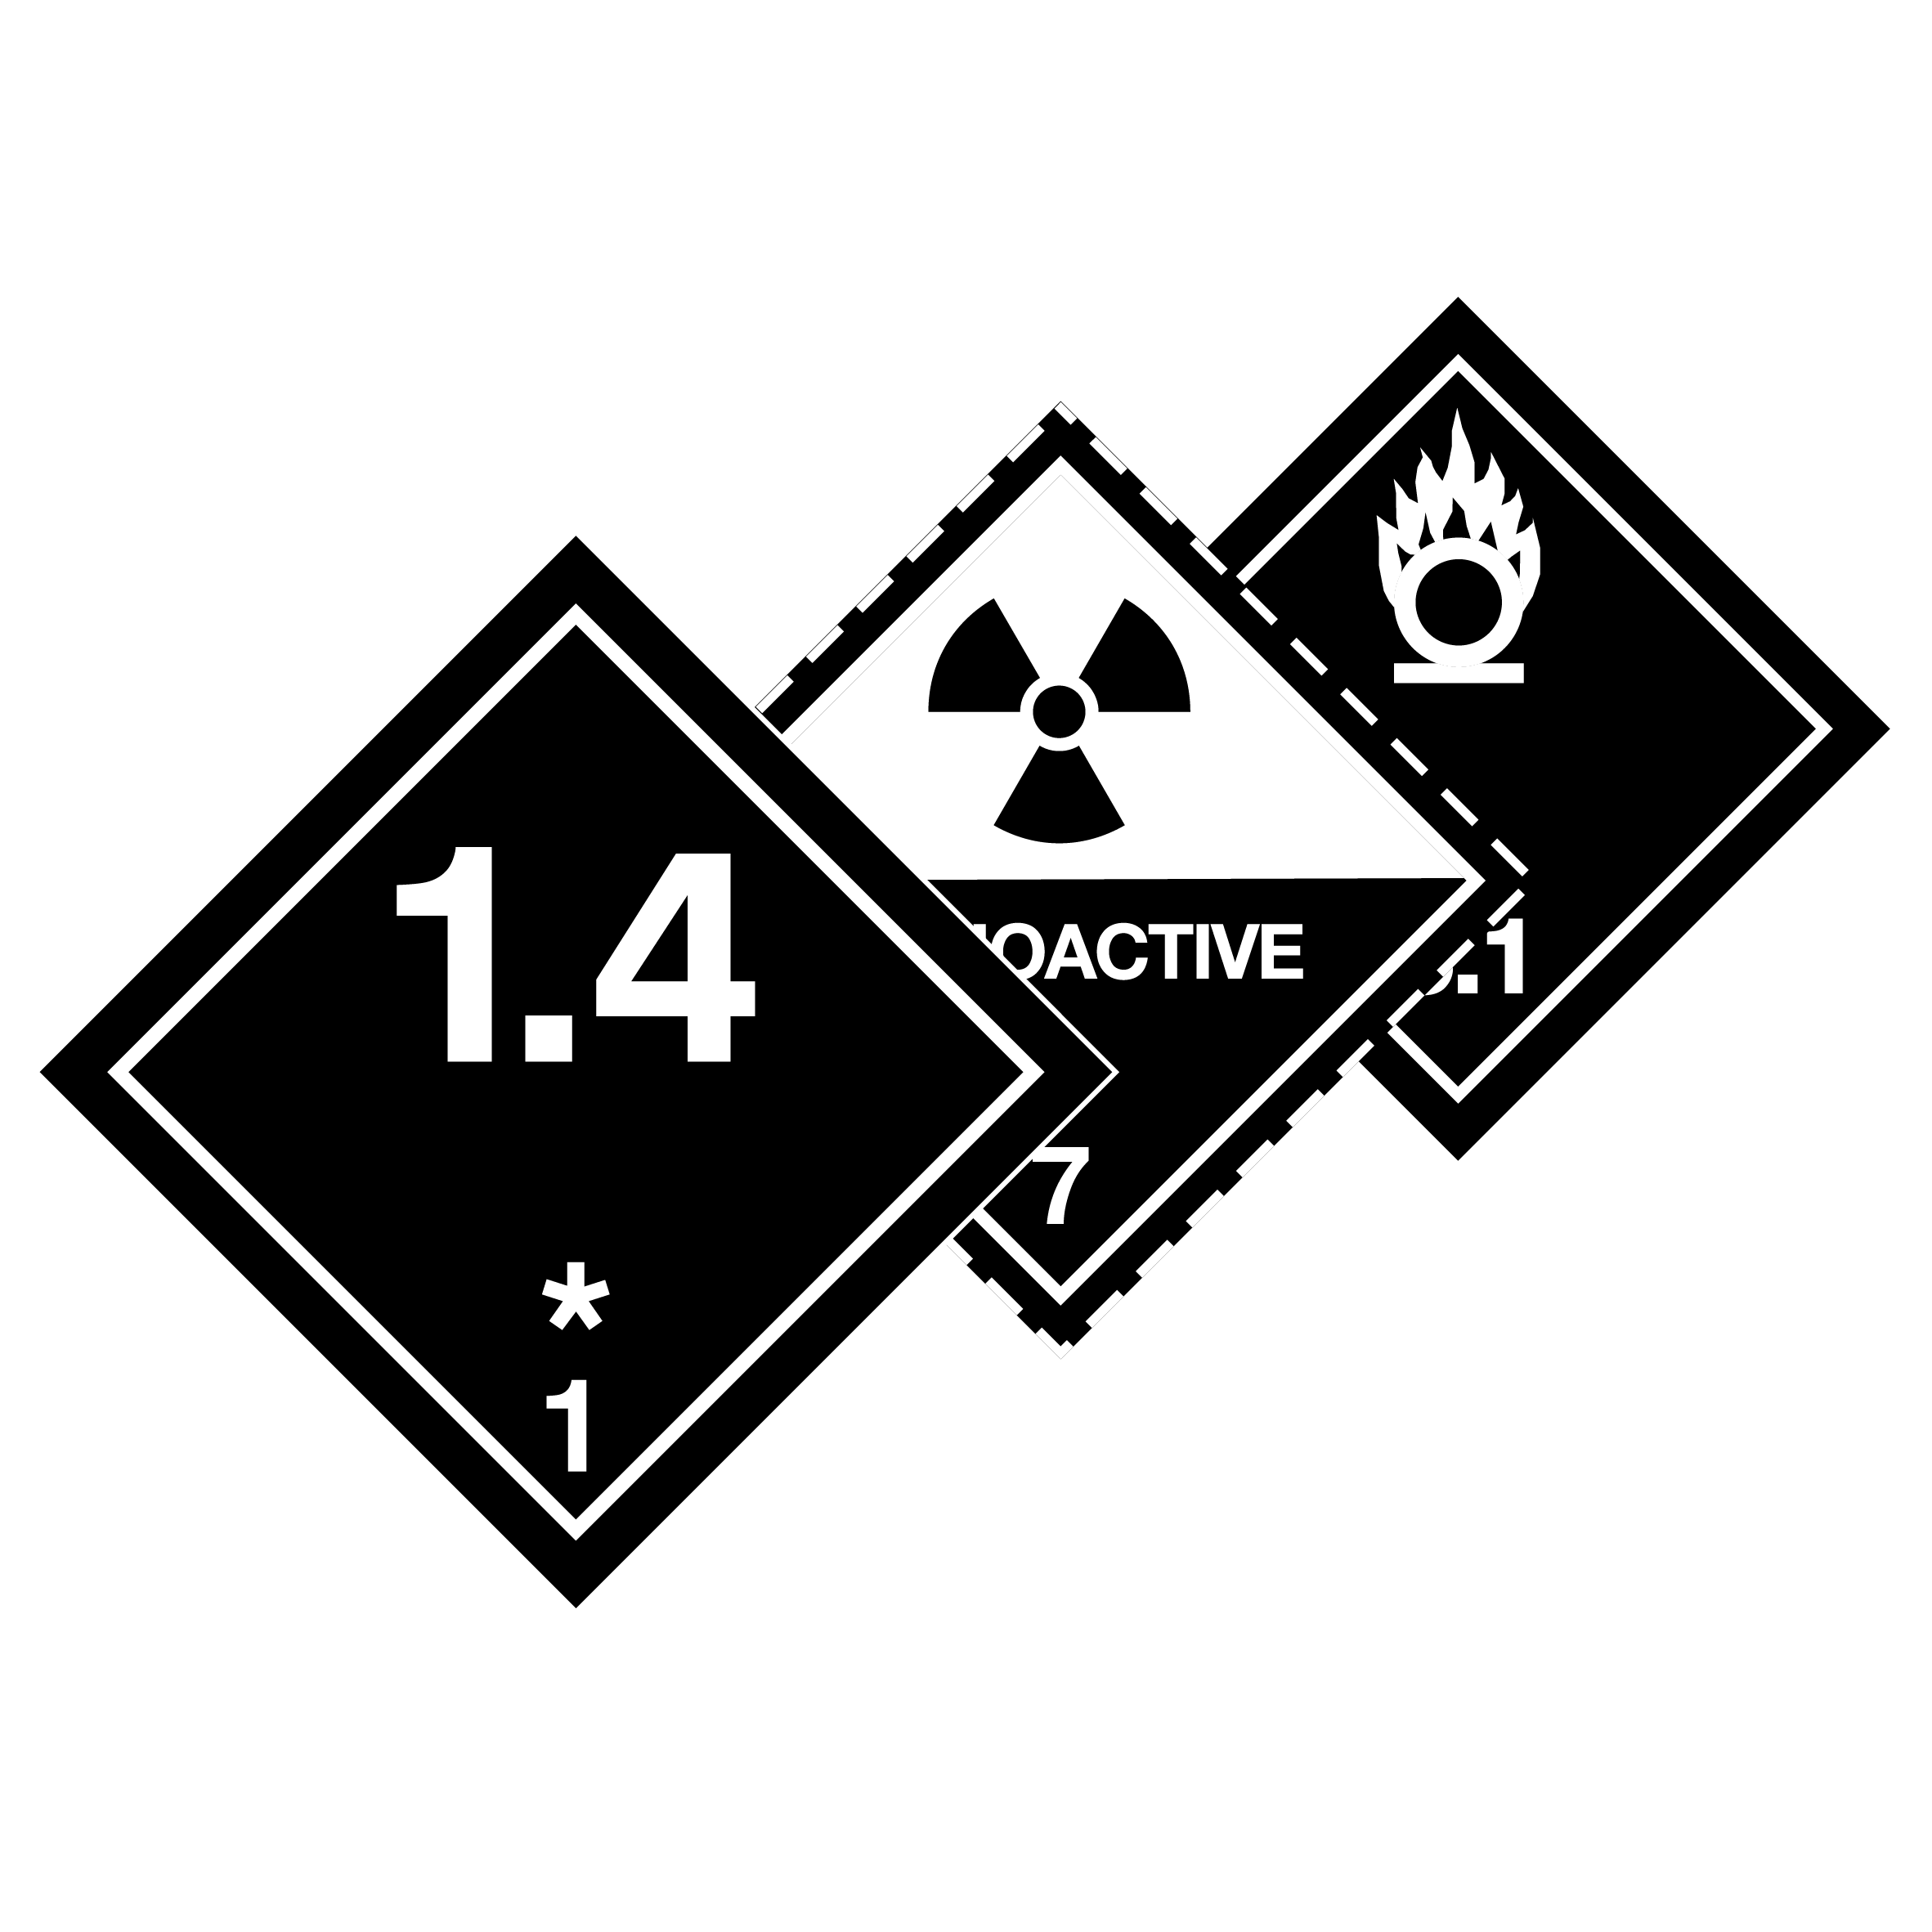 ADR stickers